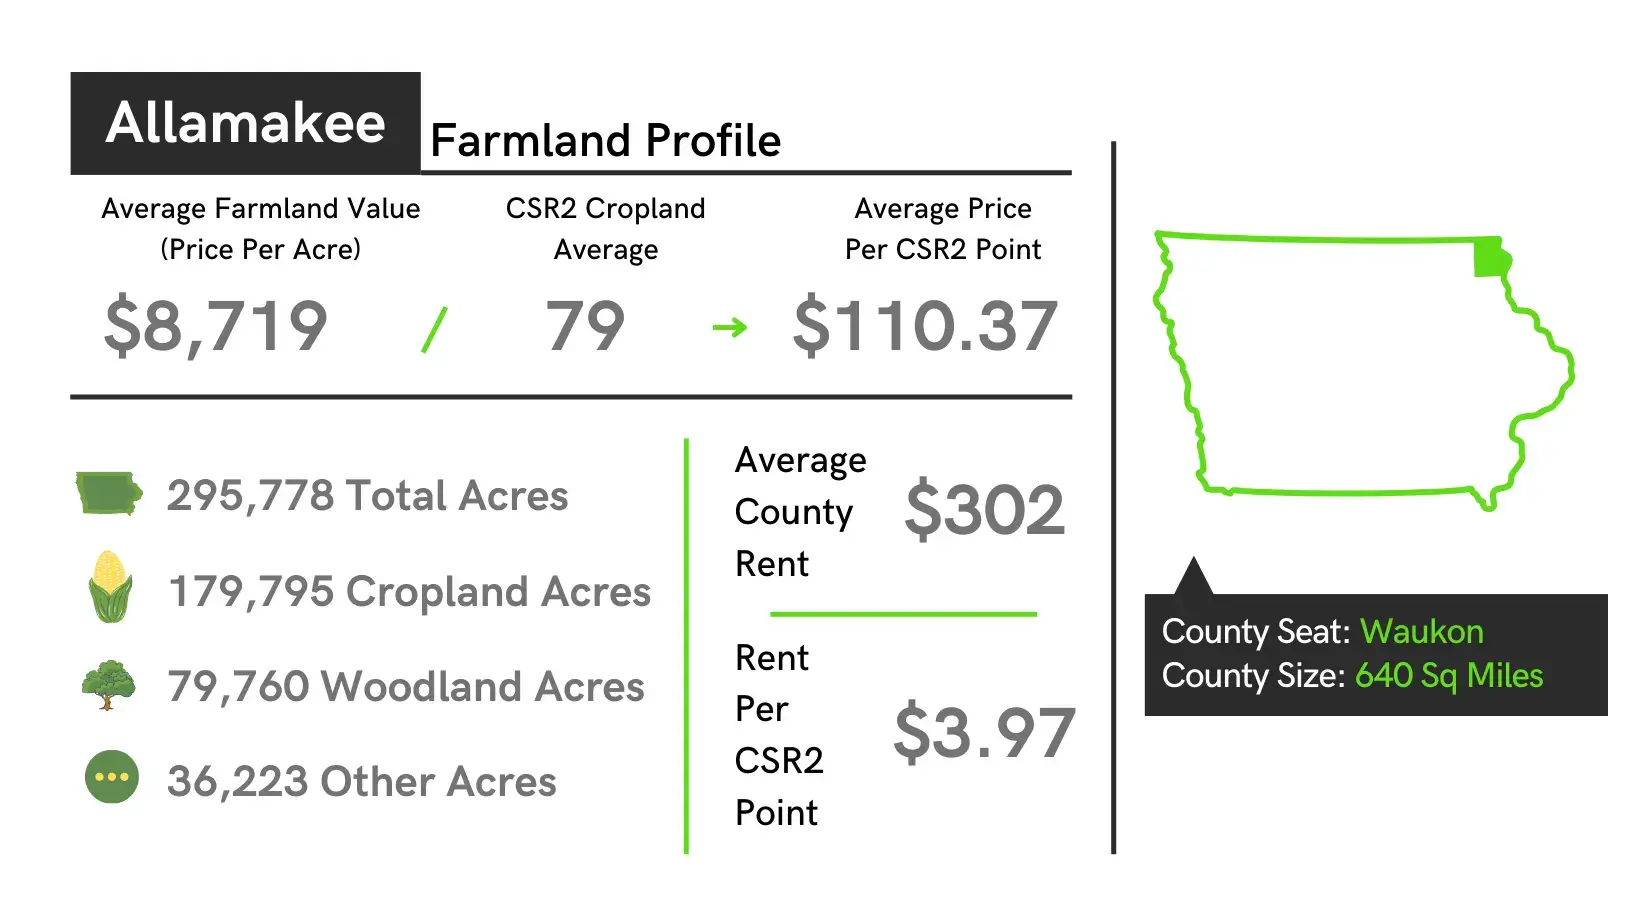 Allamakee County Farmland Profile